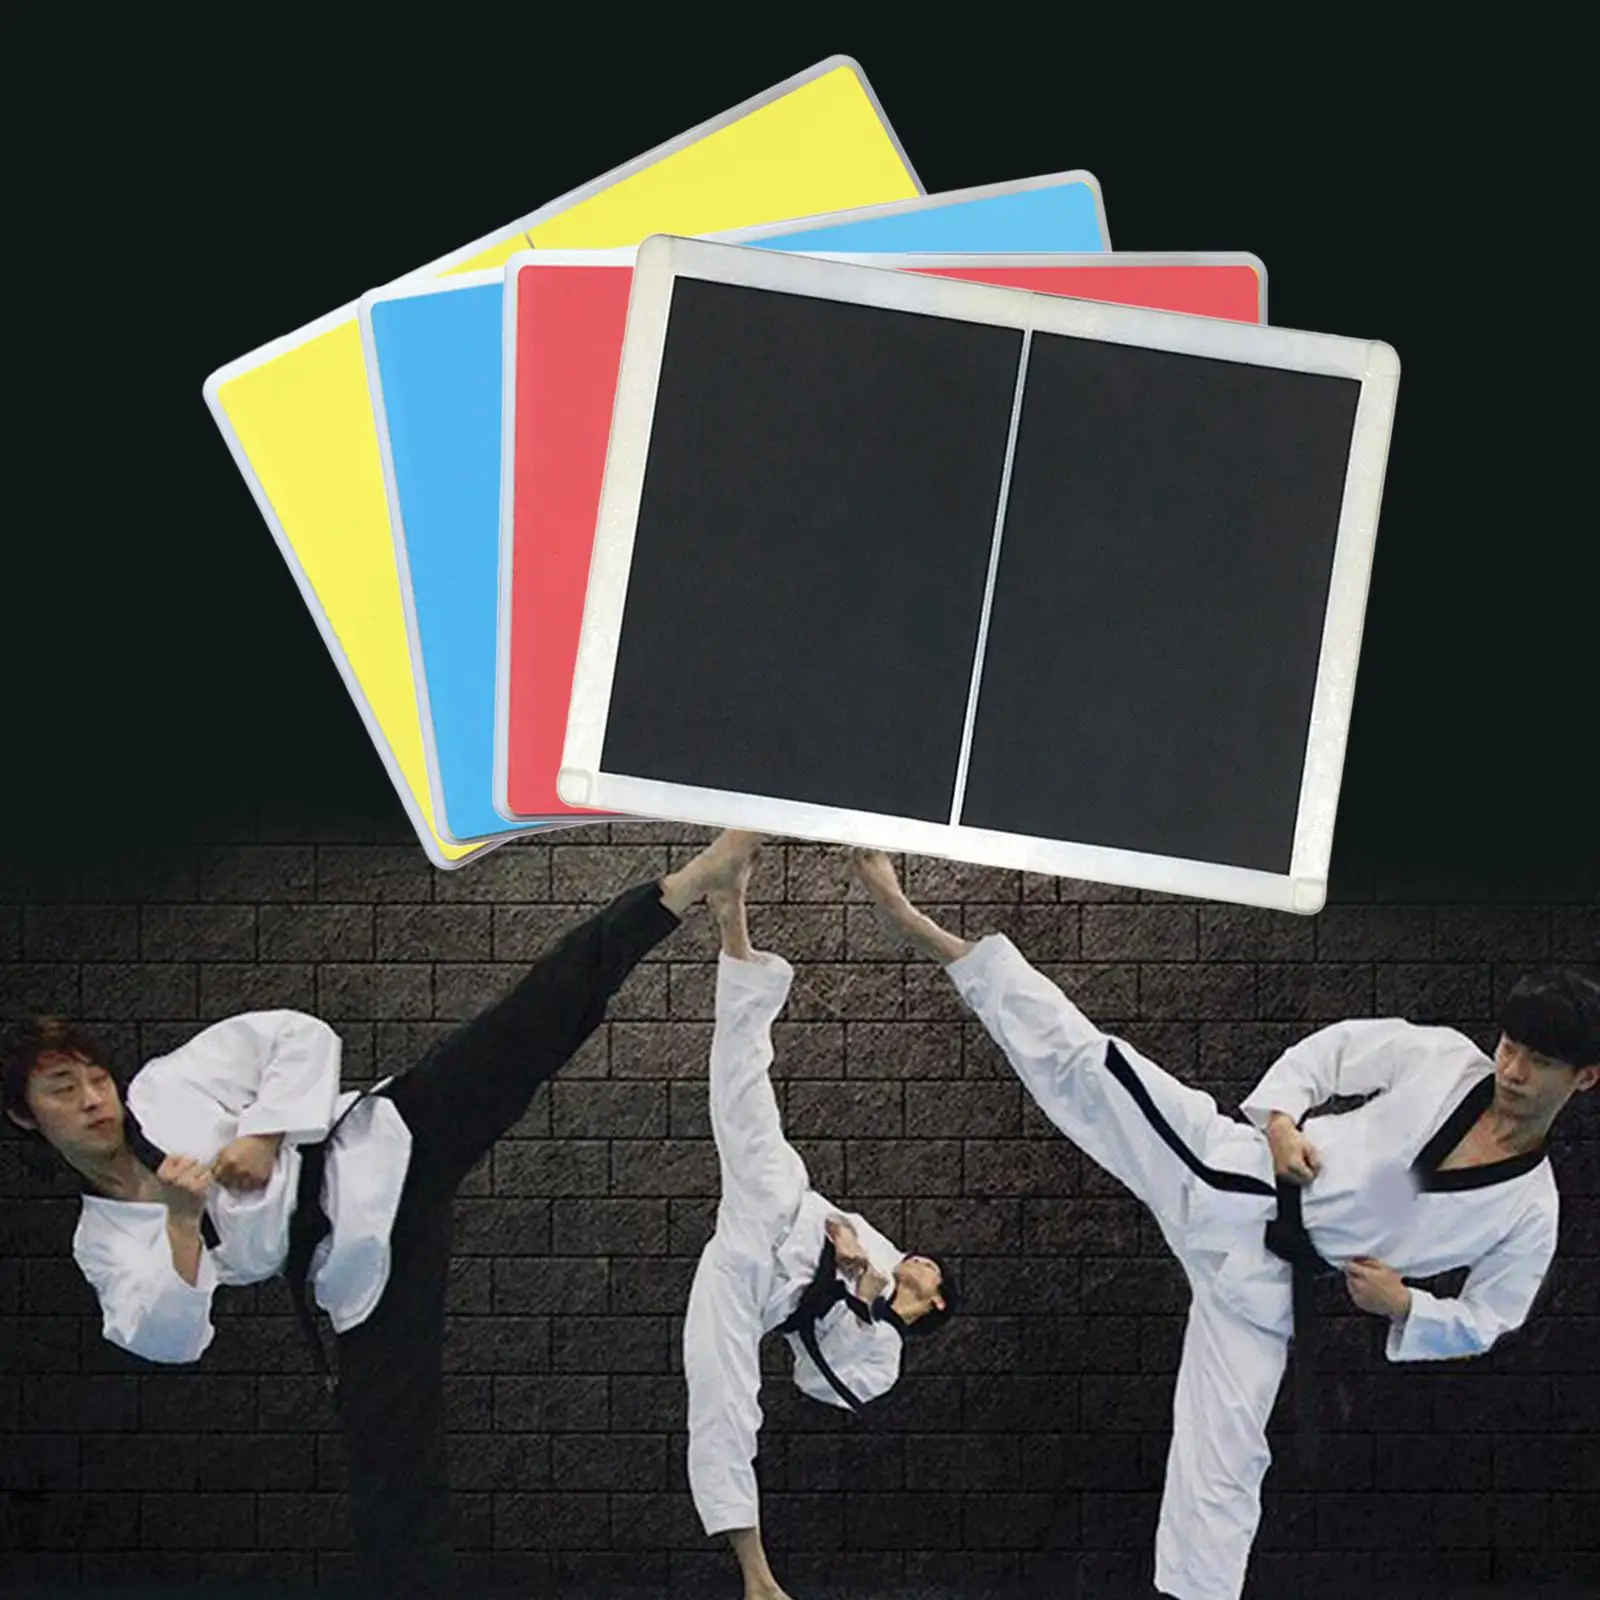 Taekwondo Karate Board Durable Rebreakable Martial Arts Training Equipment for Martial Arts